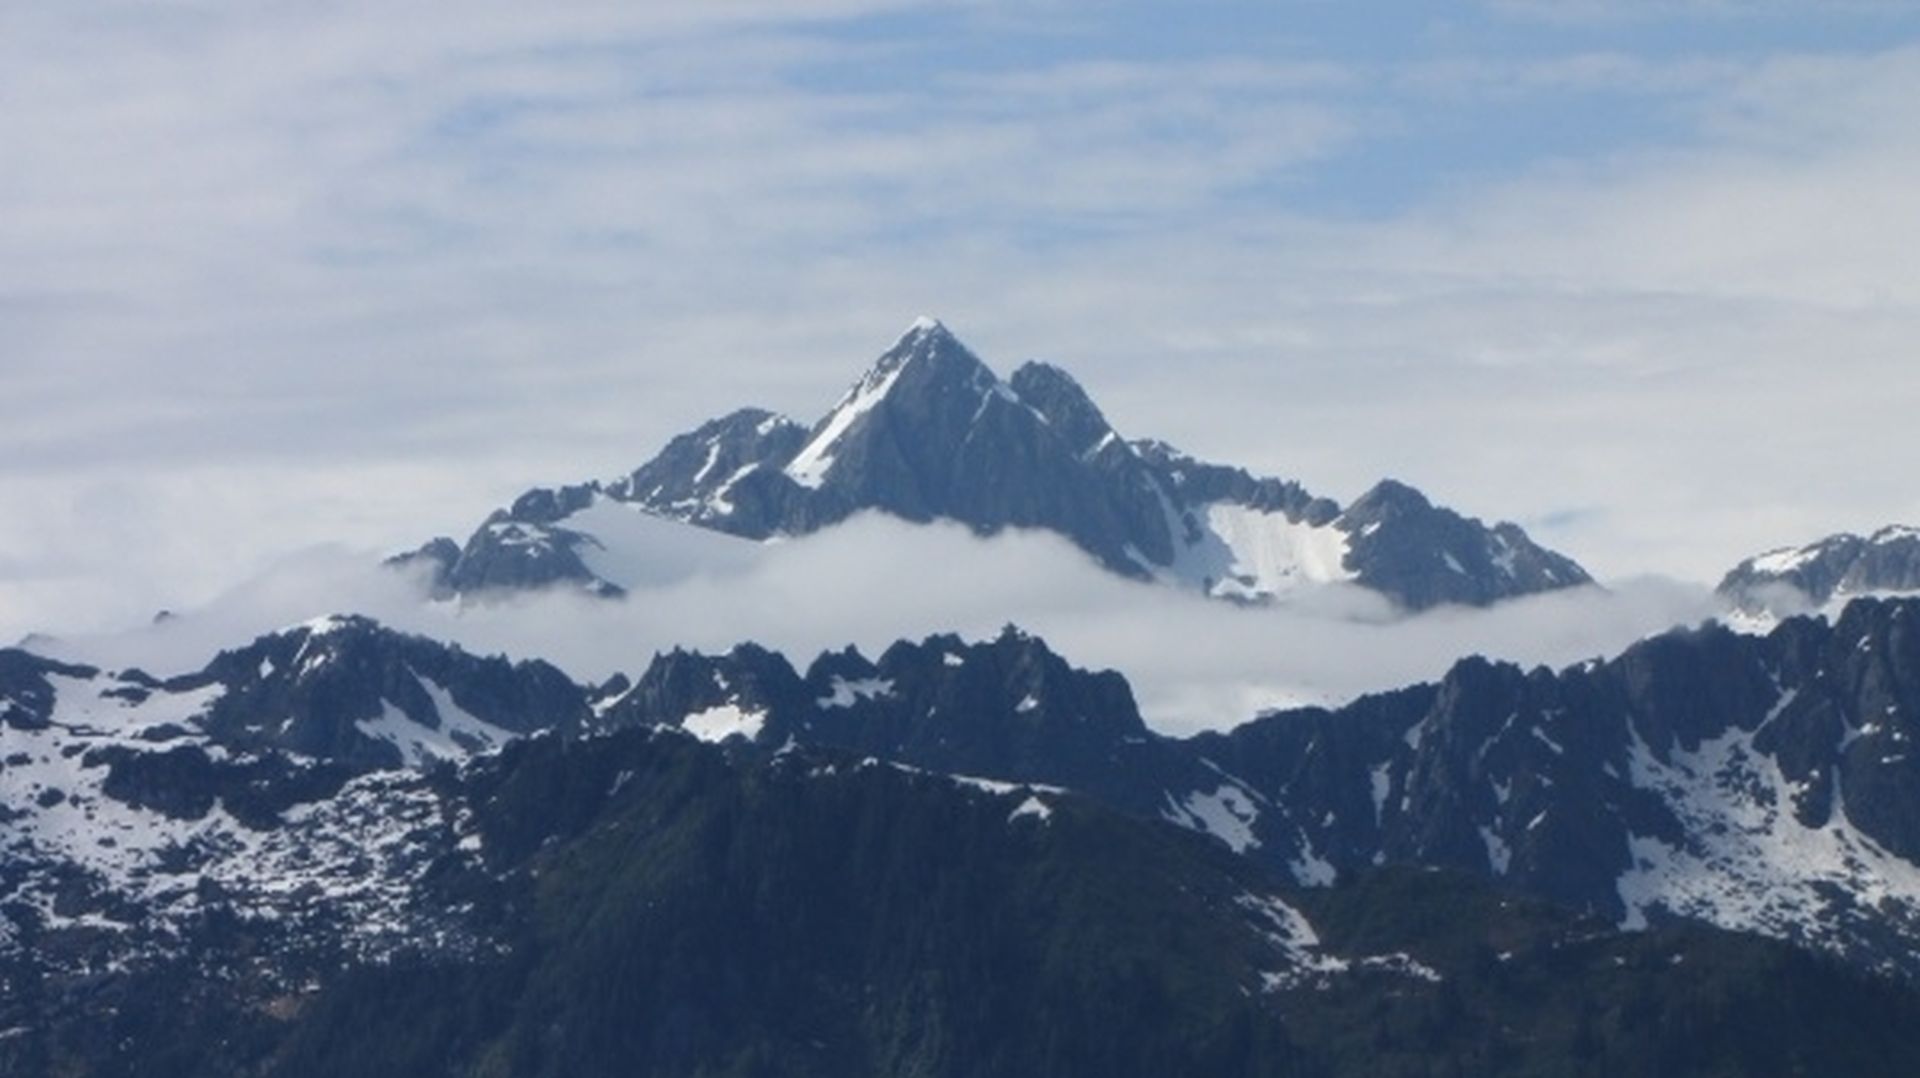 Seward Glacier Cruise - languid, elegant strato cumulus seeks cheeky meteorological trough for barometric hi-jinx